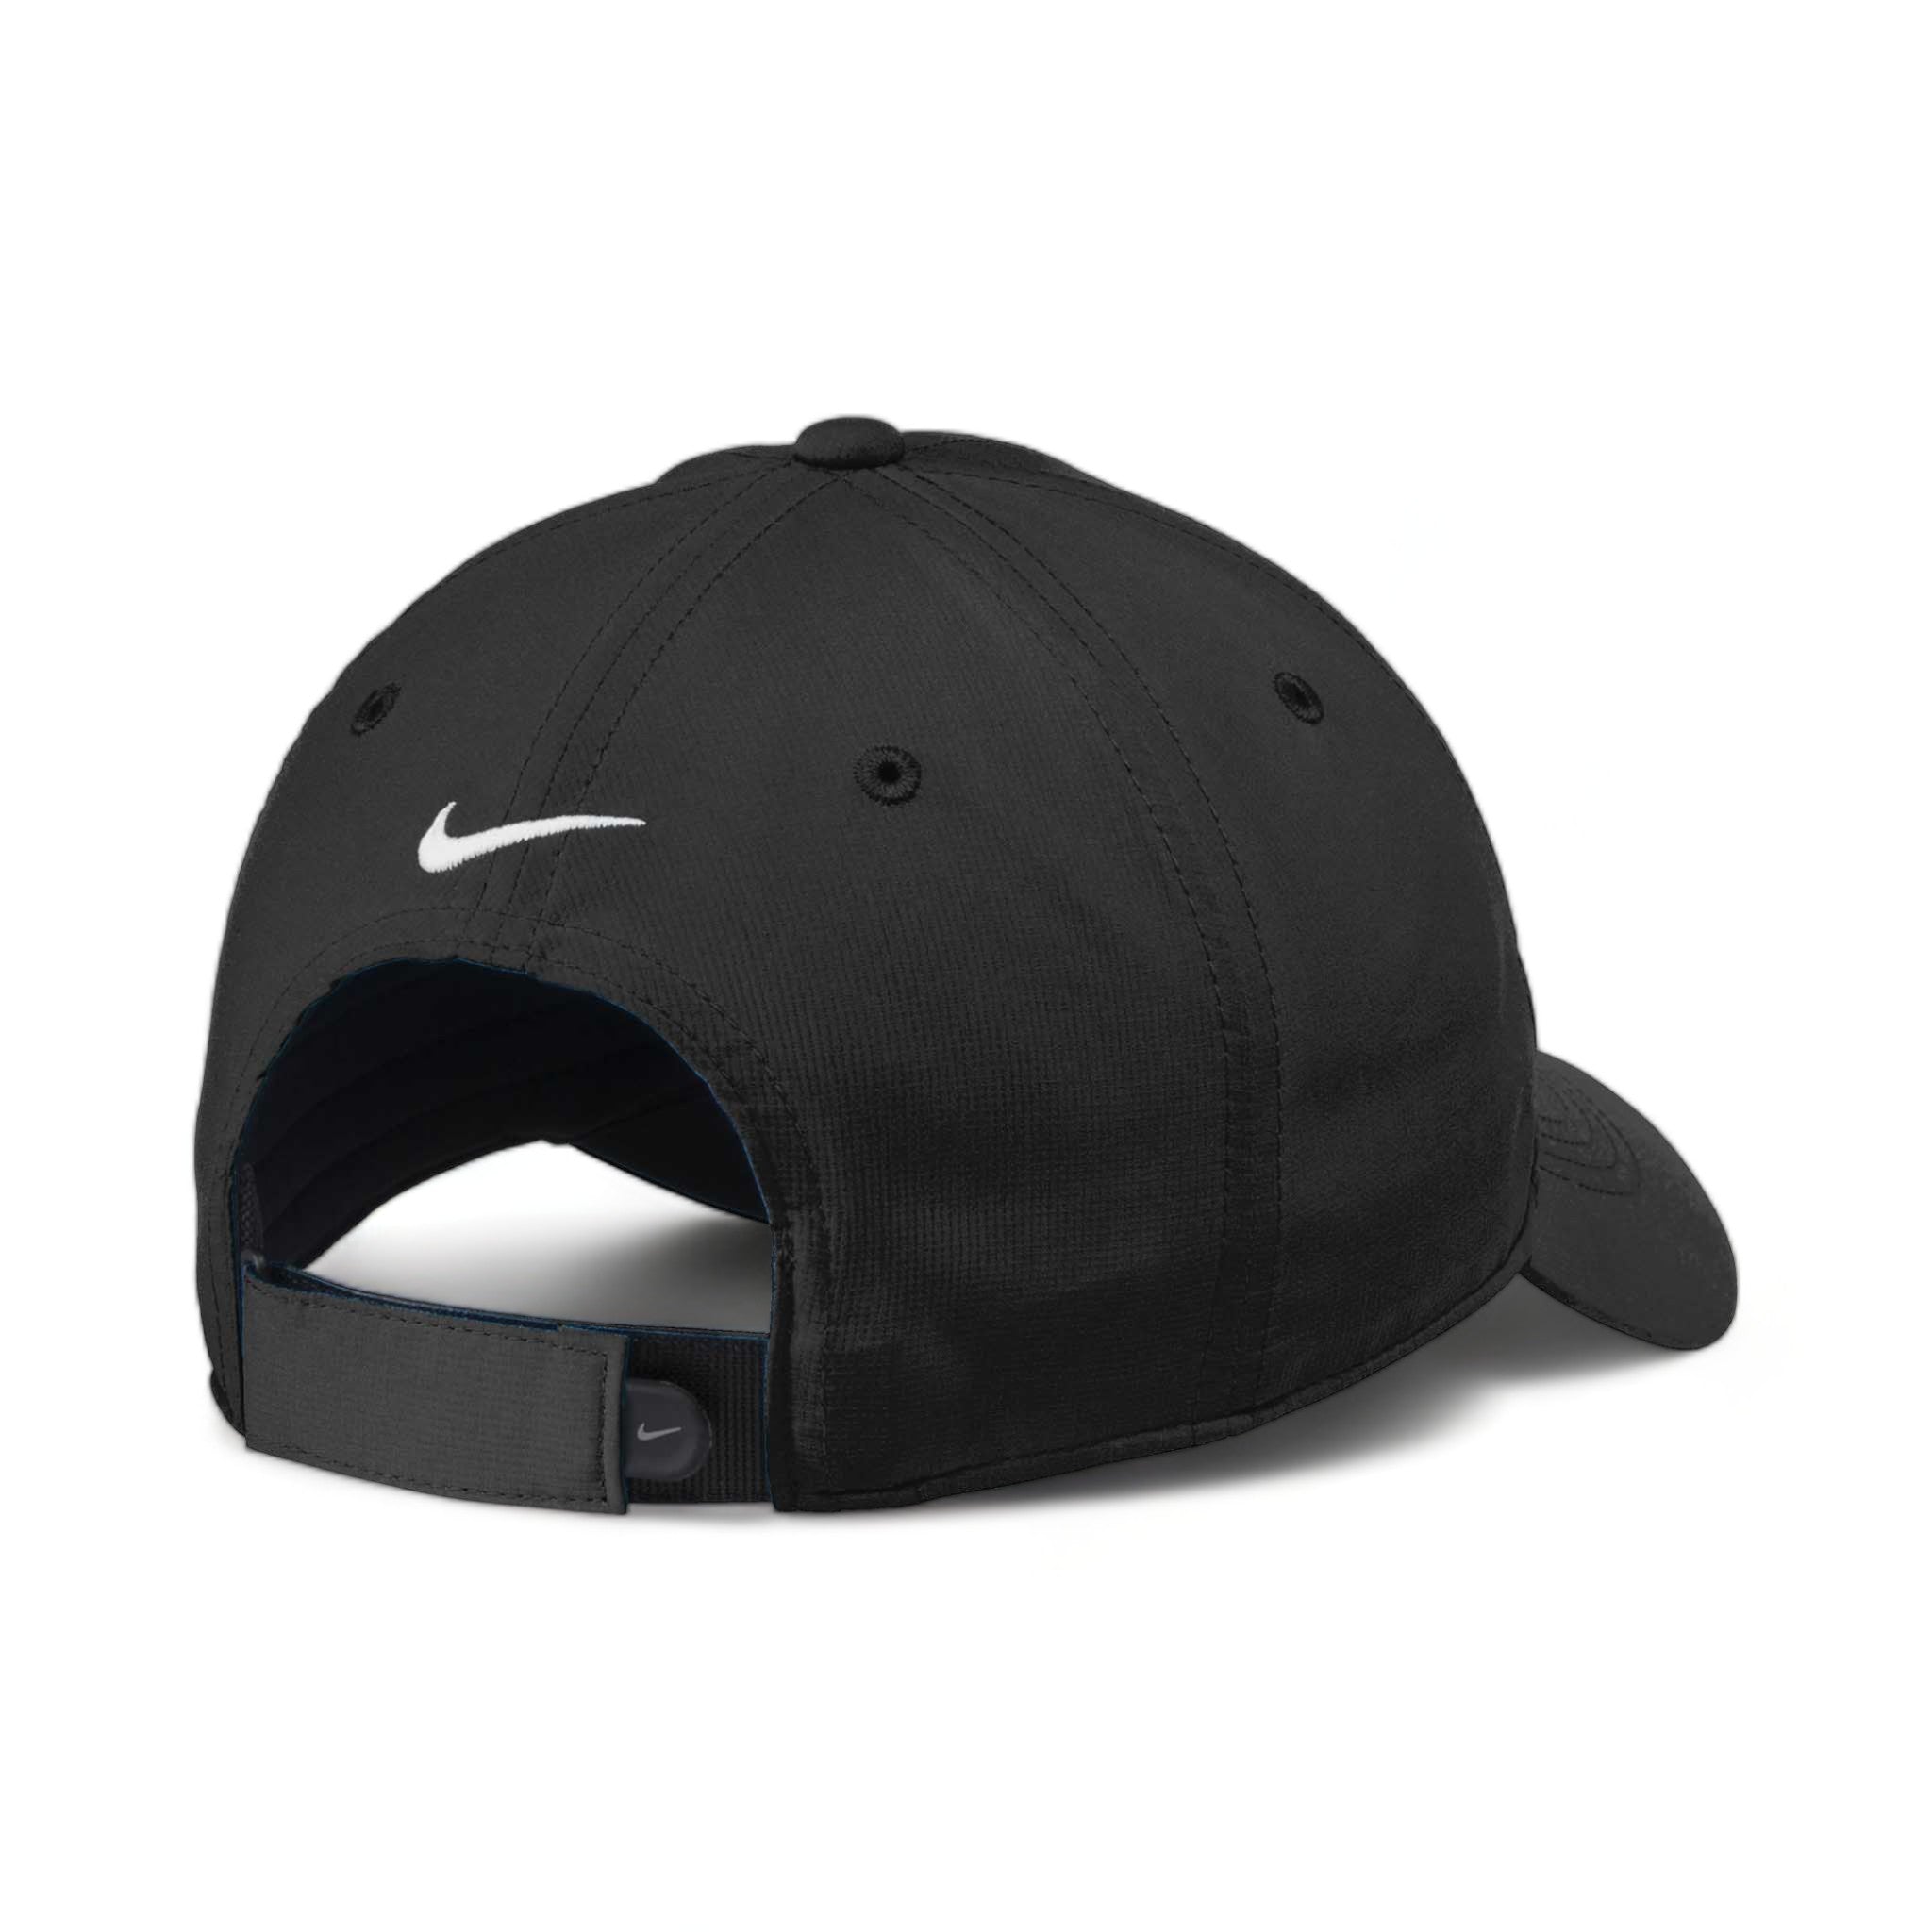 Back view of Nike NKFB6444 custom hat in black